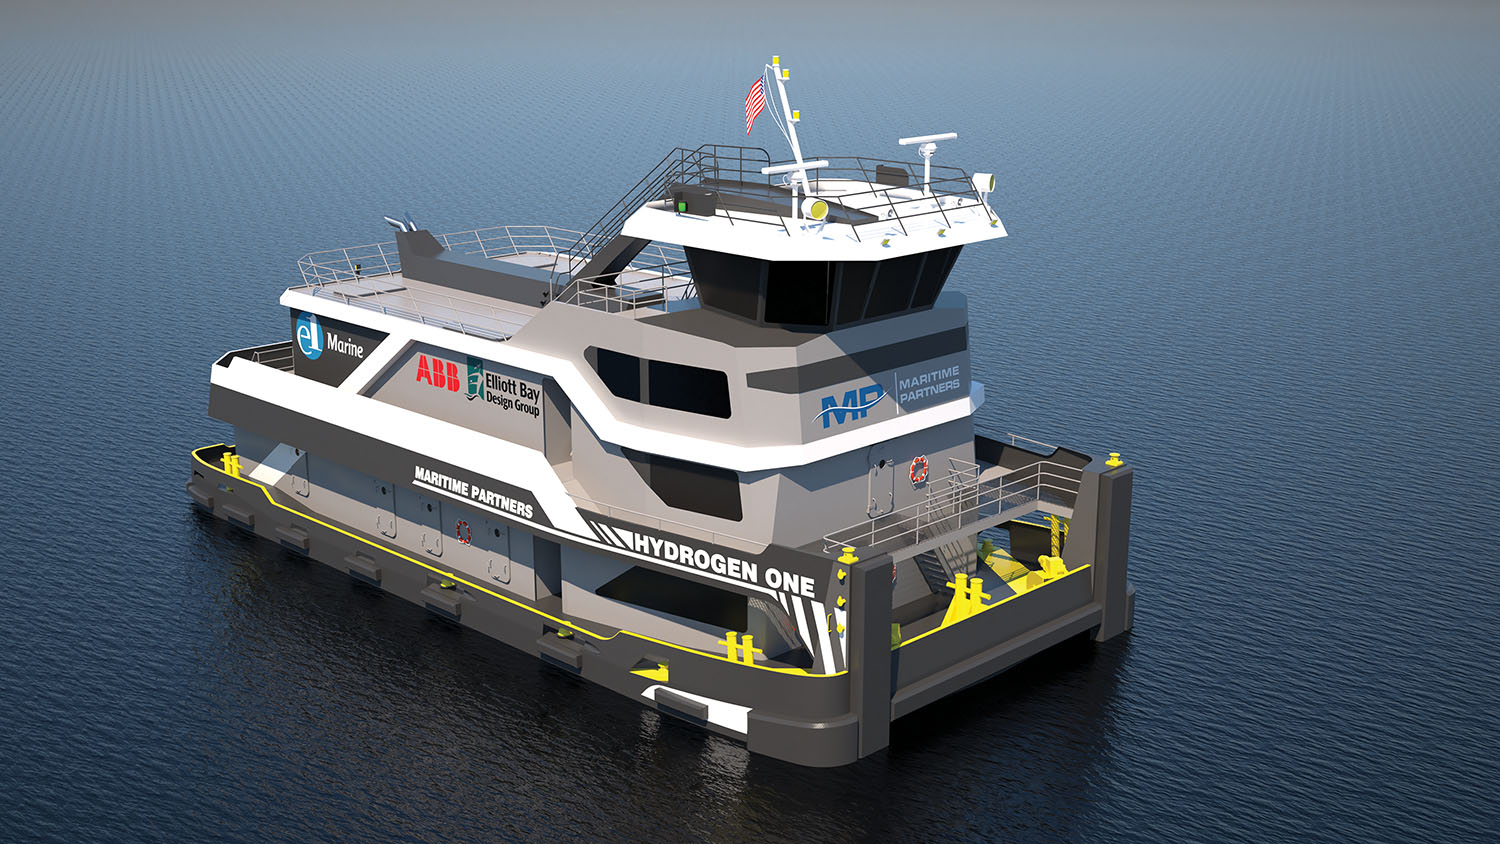 New Partnership Plans Methanol/Hydrogen-Powered Towboat